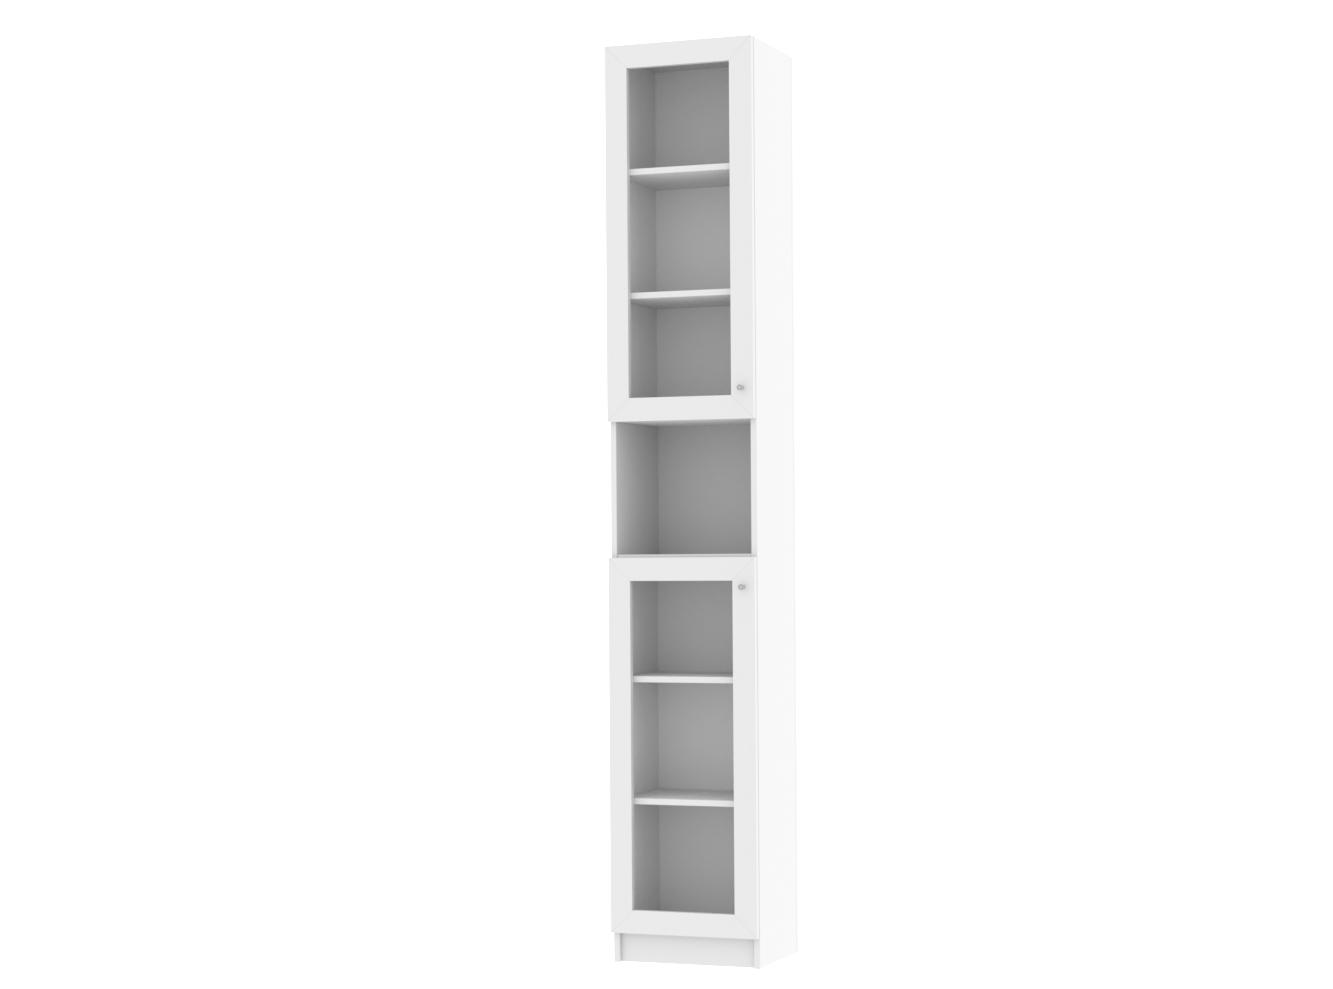 Книжный шкаф Билли 379 white ИКЕА (IKEA) изображение товара